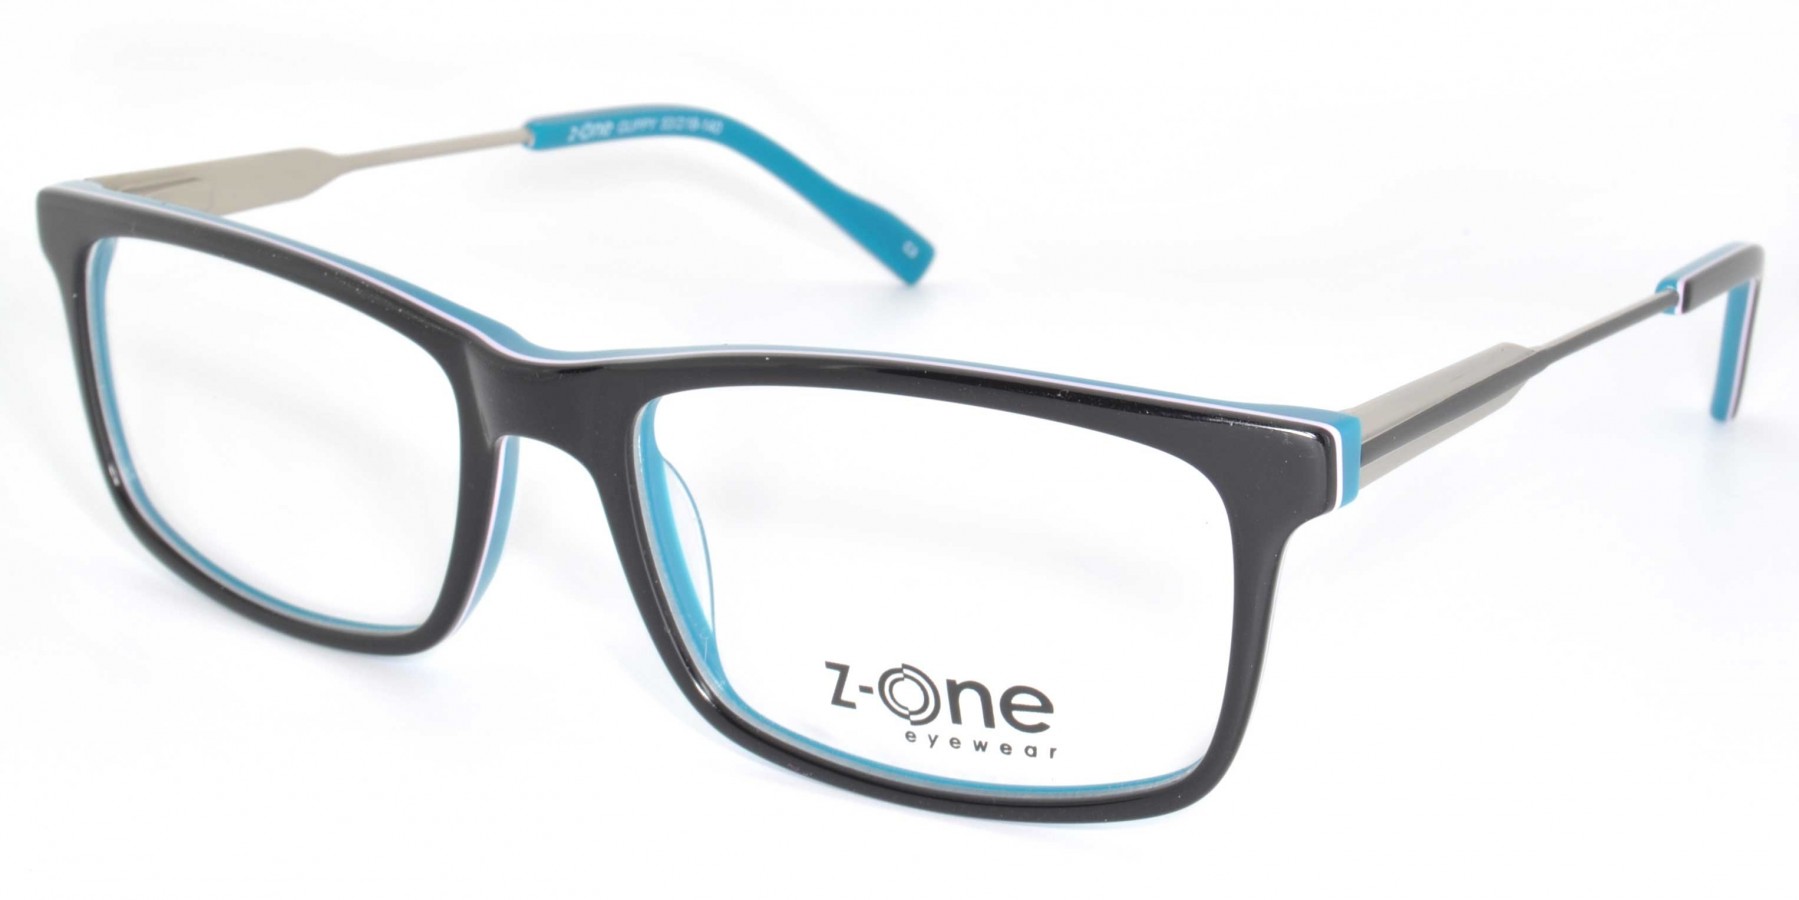 Z-One Guppy Prescription Glasses